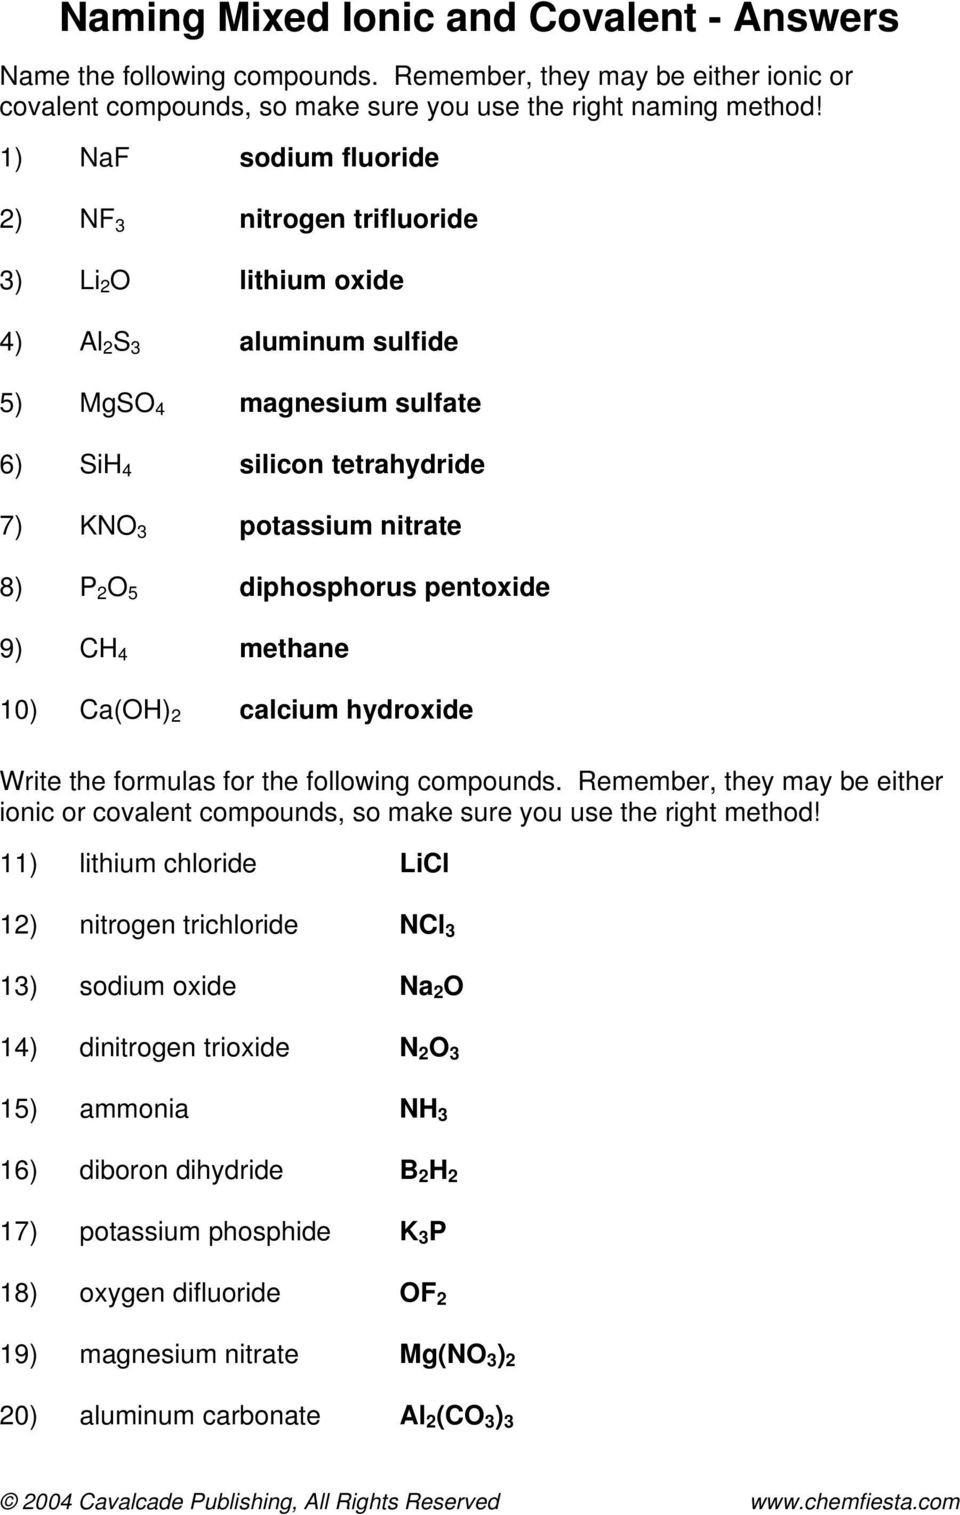 Naming Compounds Practice Worksheet Worksheet 23 Writing formulas Chemistry Answers